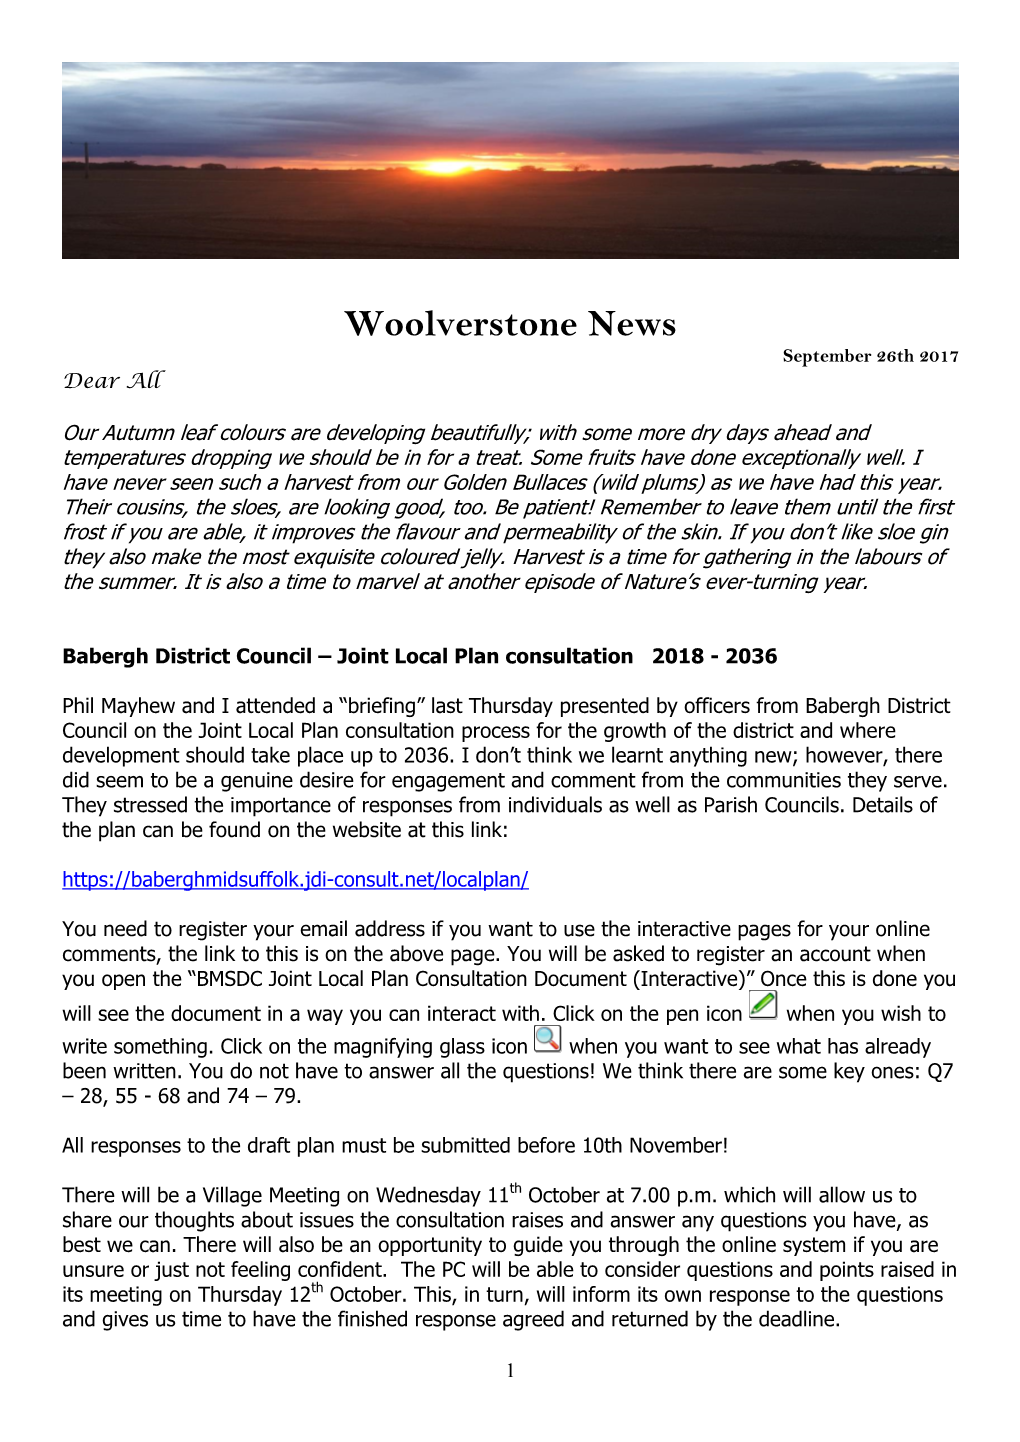 Woolverstone News September 26Th 2017 Dear All